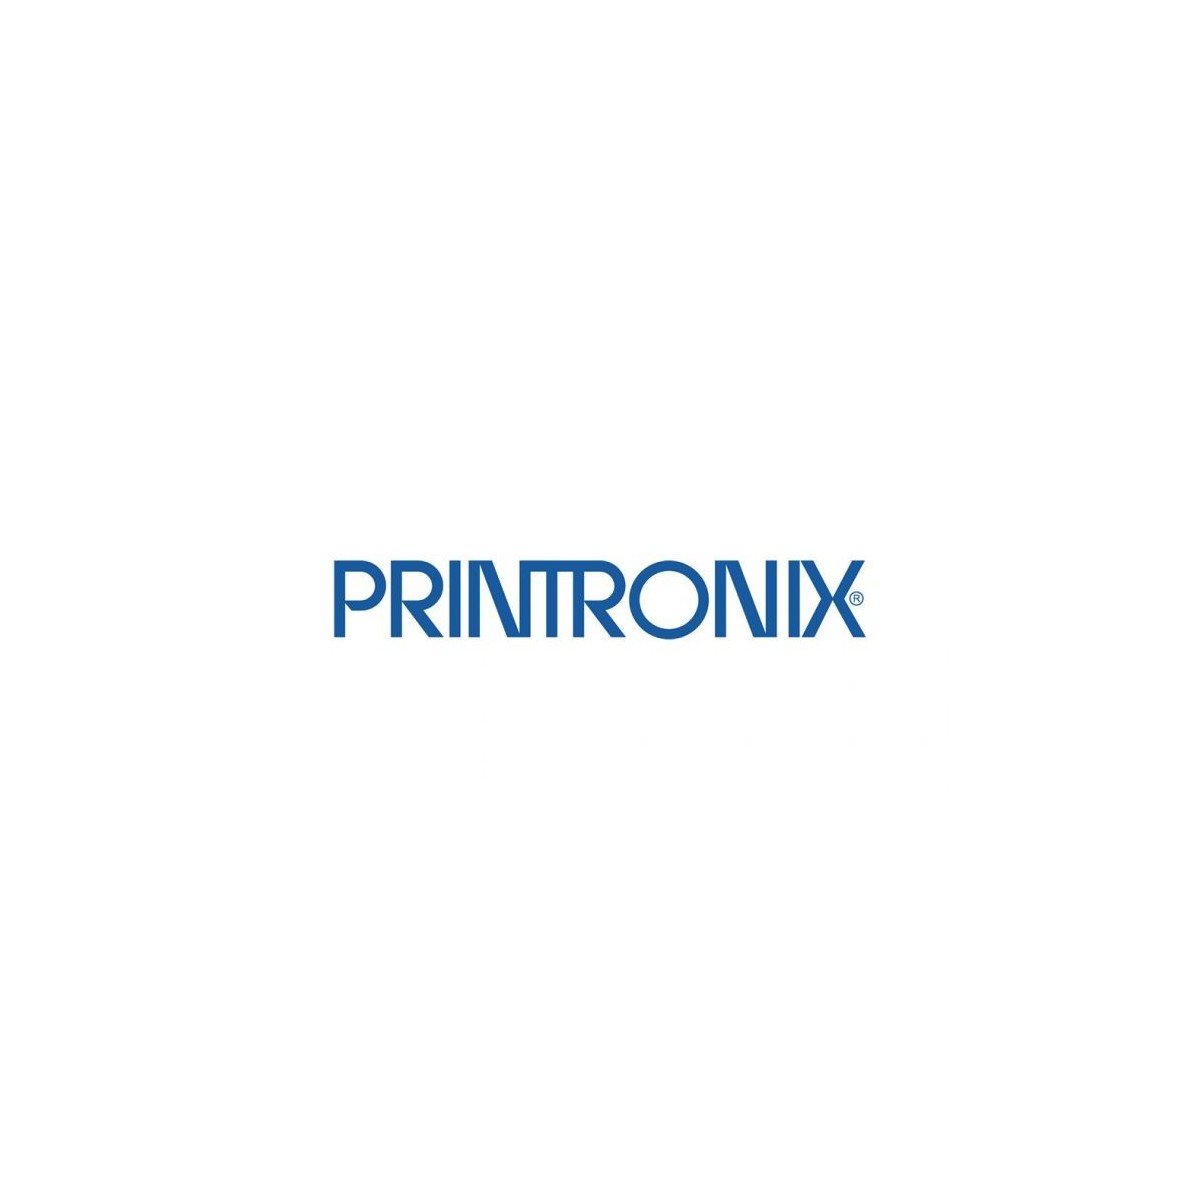 Printronix Rewind/Batch